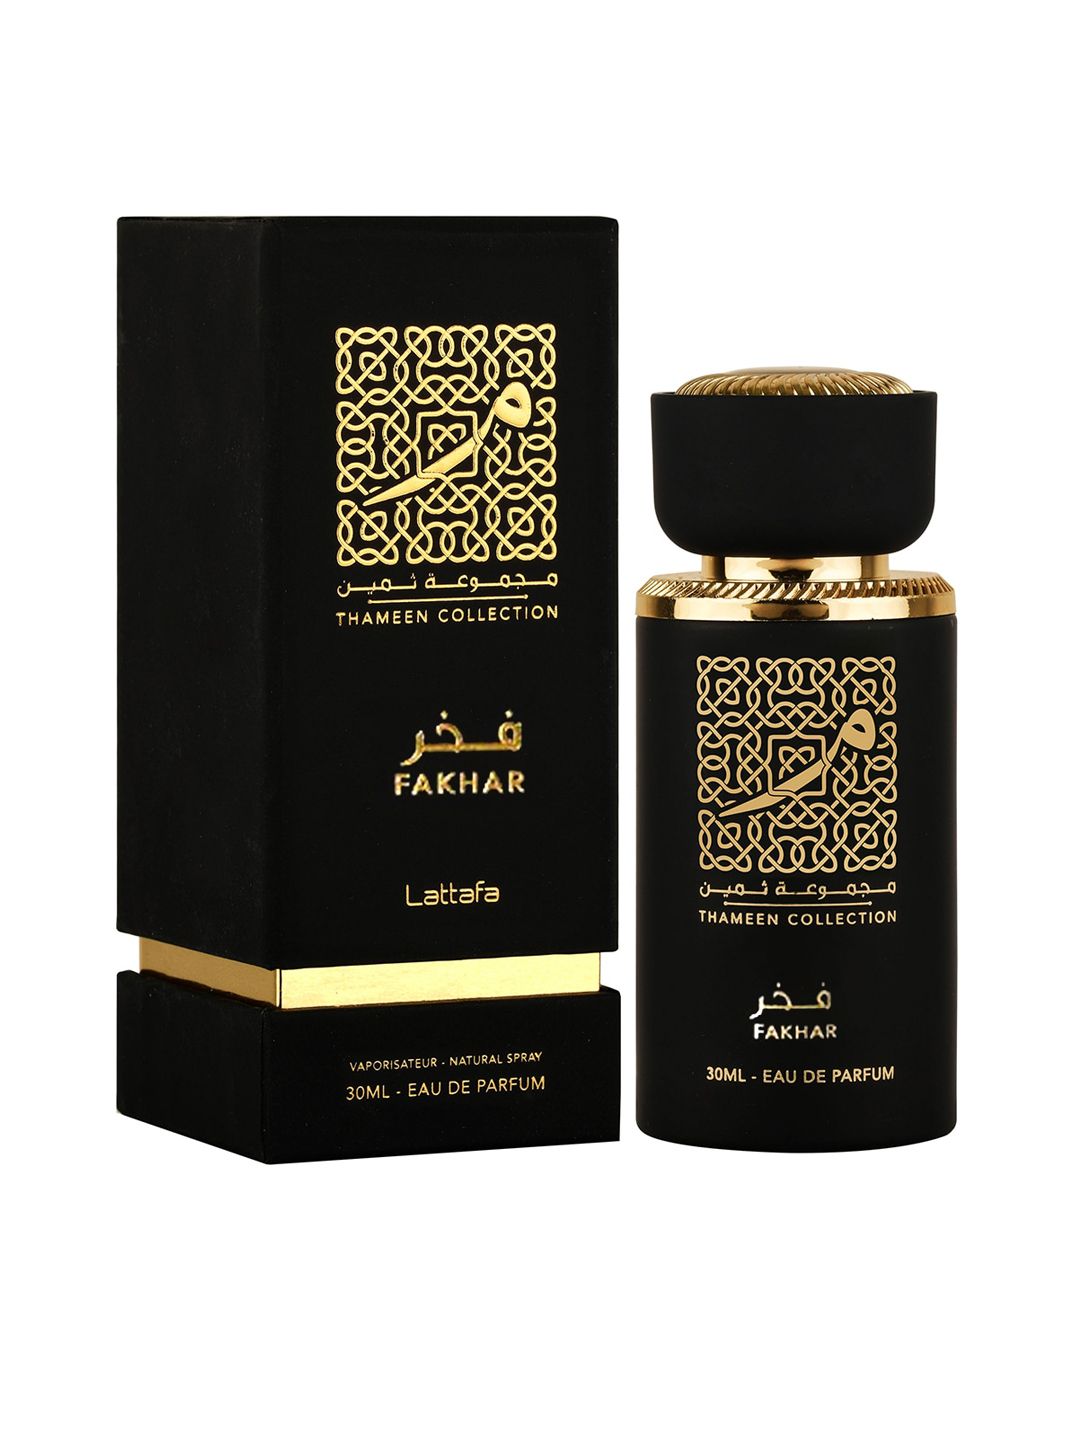 Lattafa Fakhar Thameen Collection Eau De Perfum 30ml Price in India